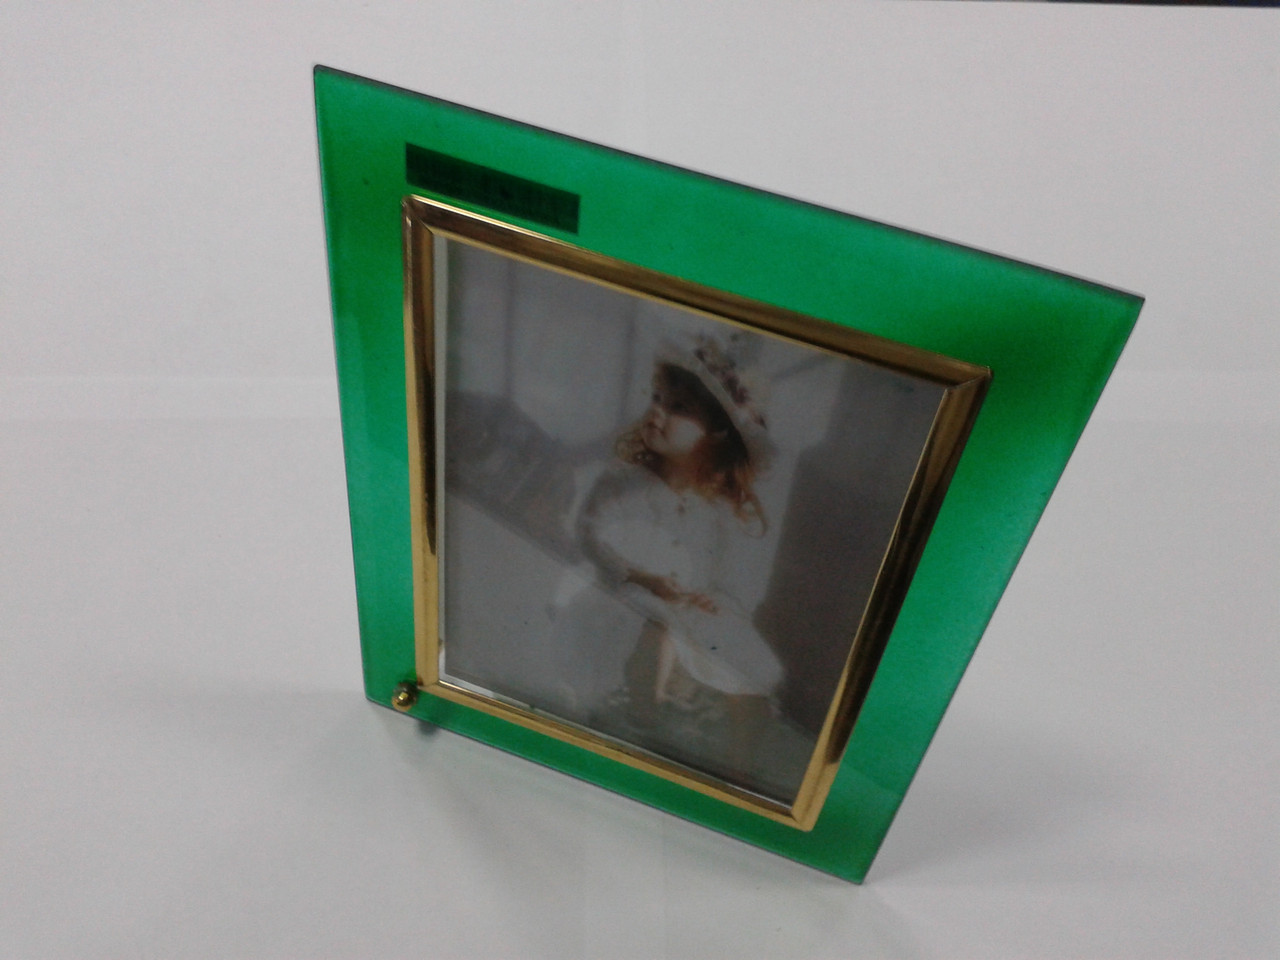 Рамка стеклянная для фото размером 10х15 см.